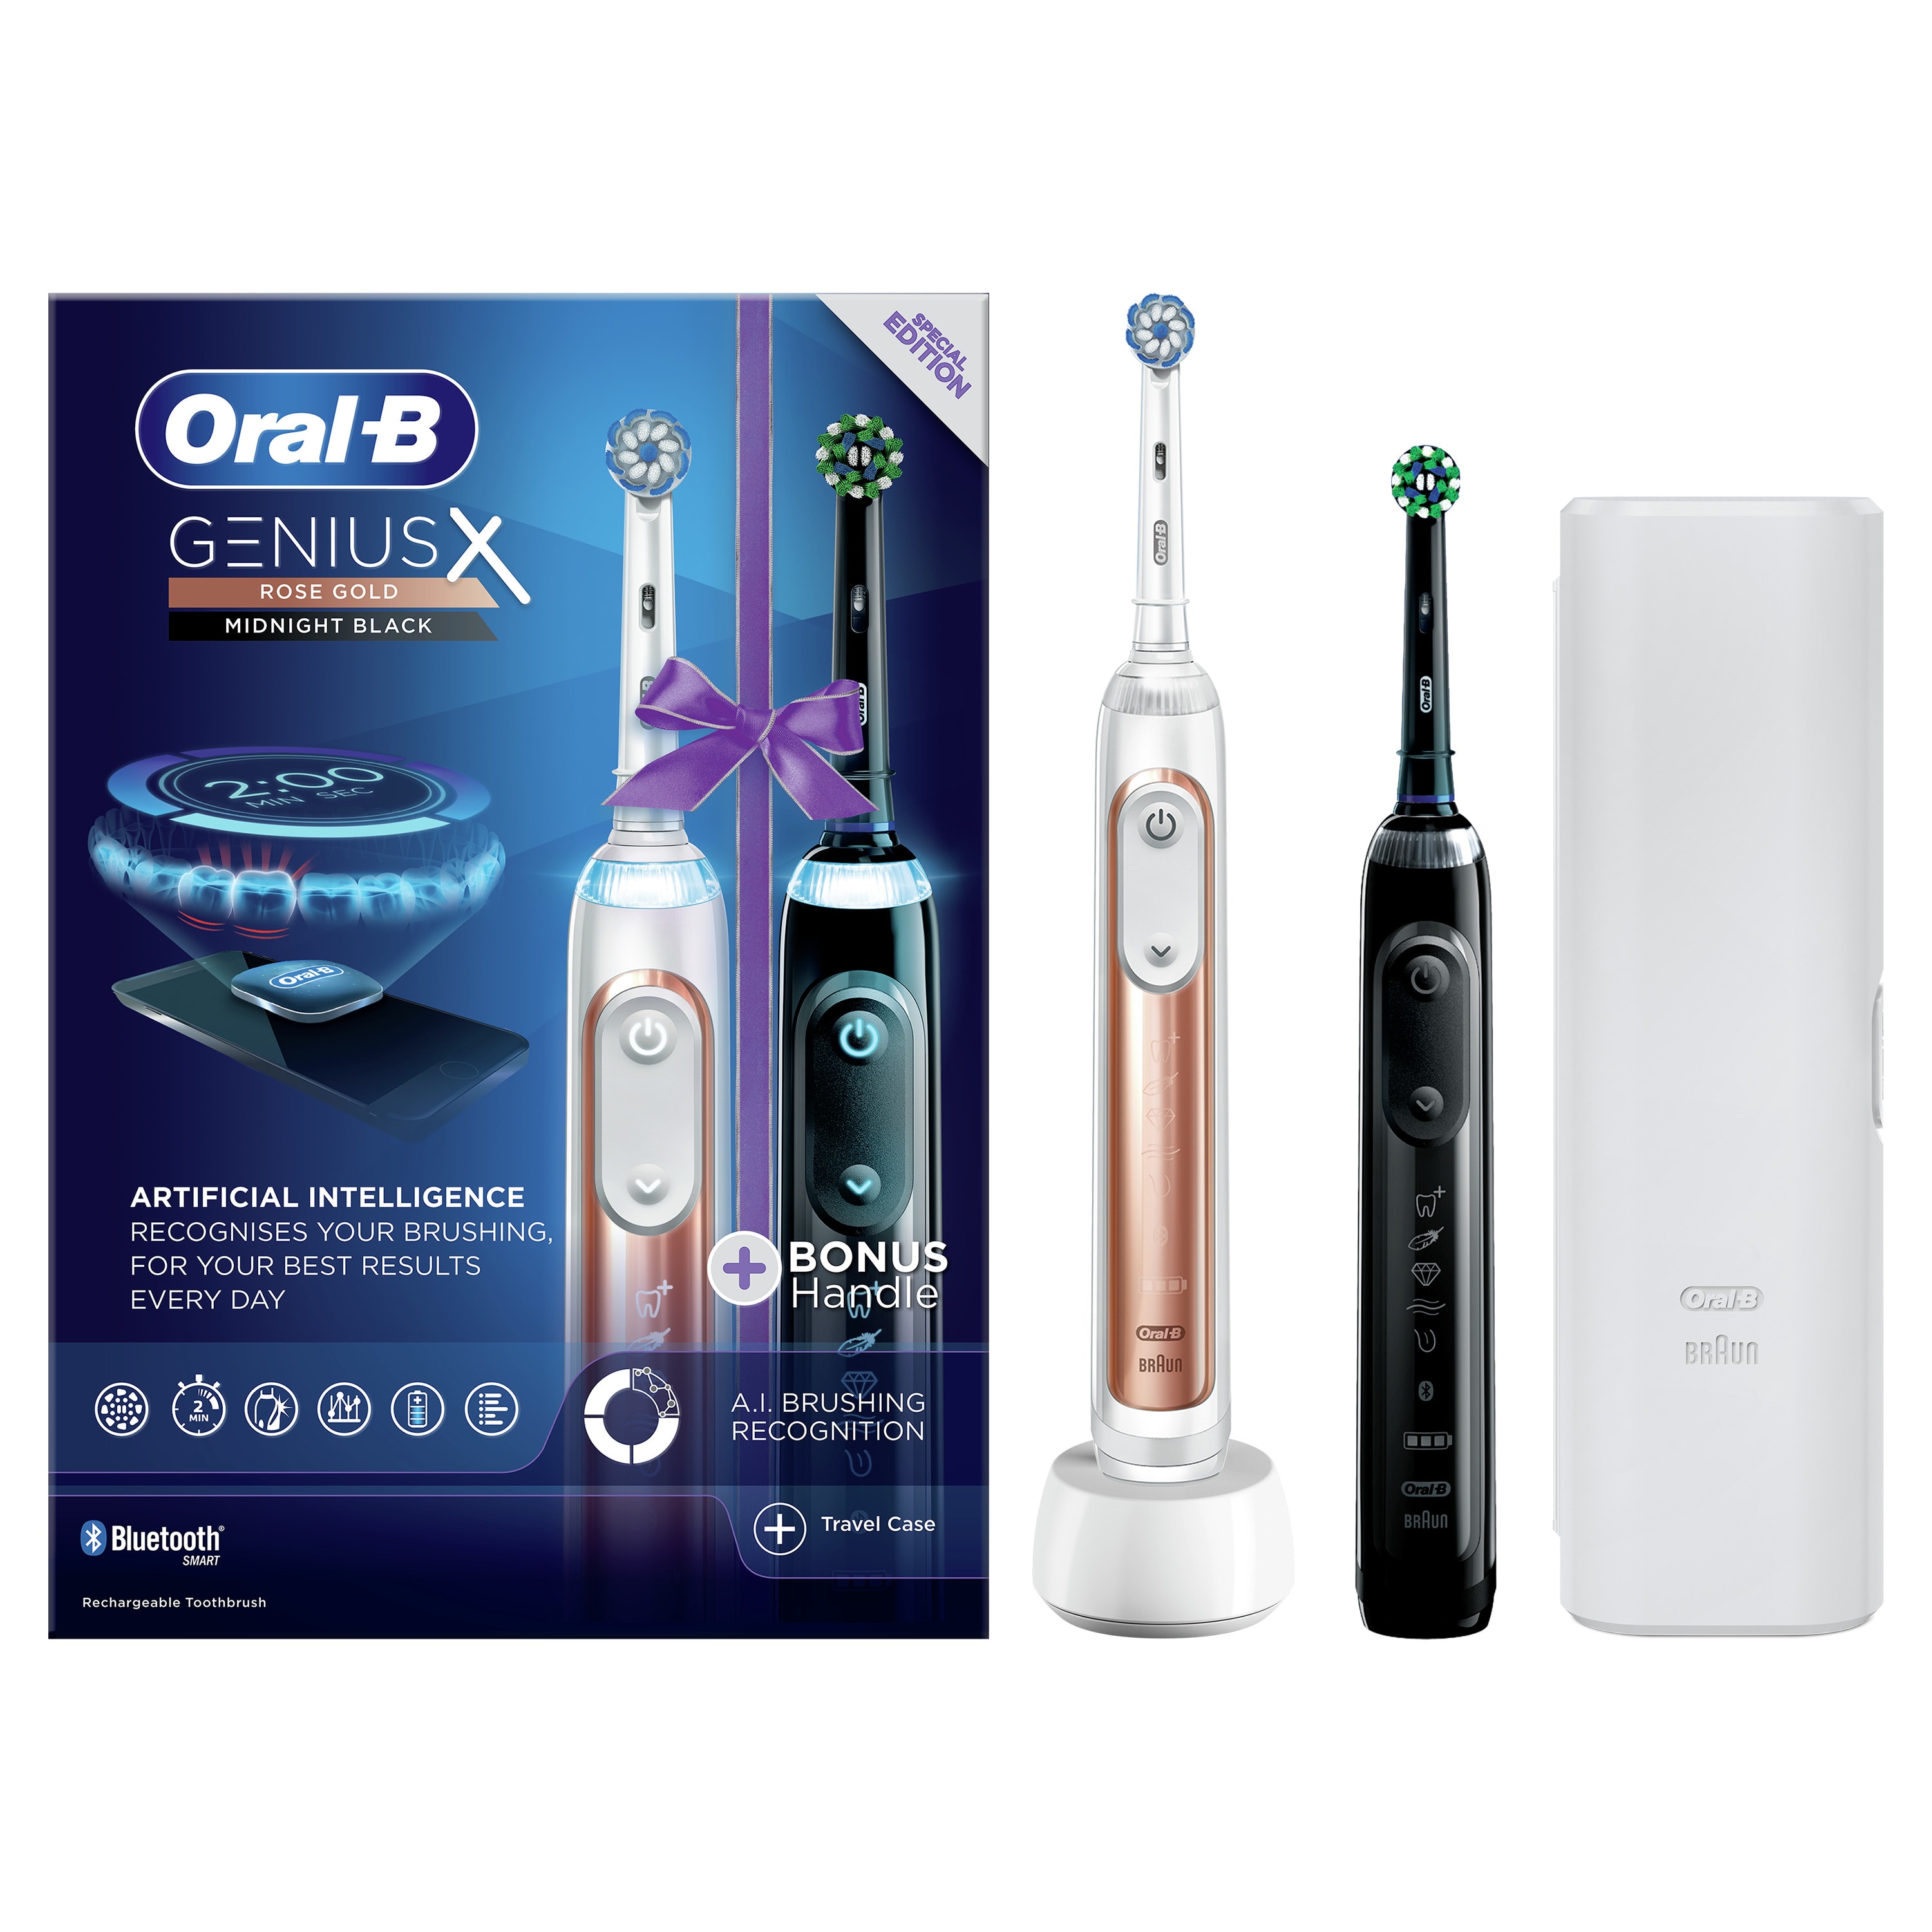 Oral-B Genius X electric toothbrush duo pack (Black u0026 Rose Gold)